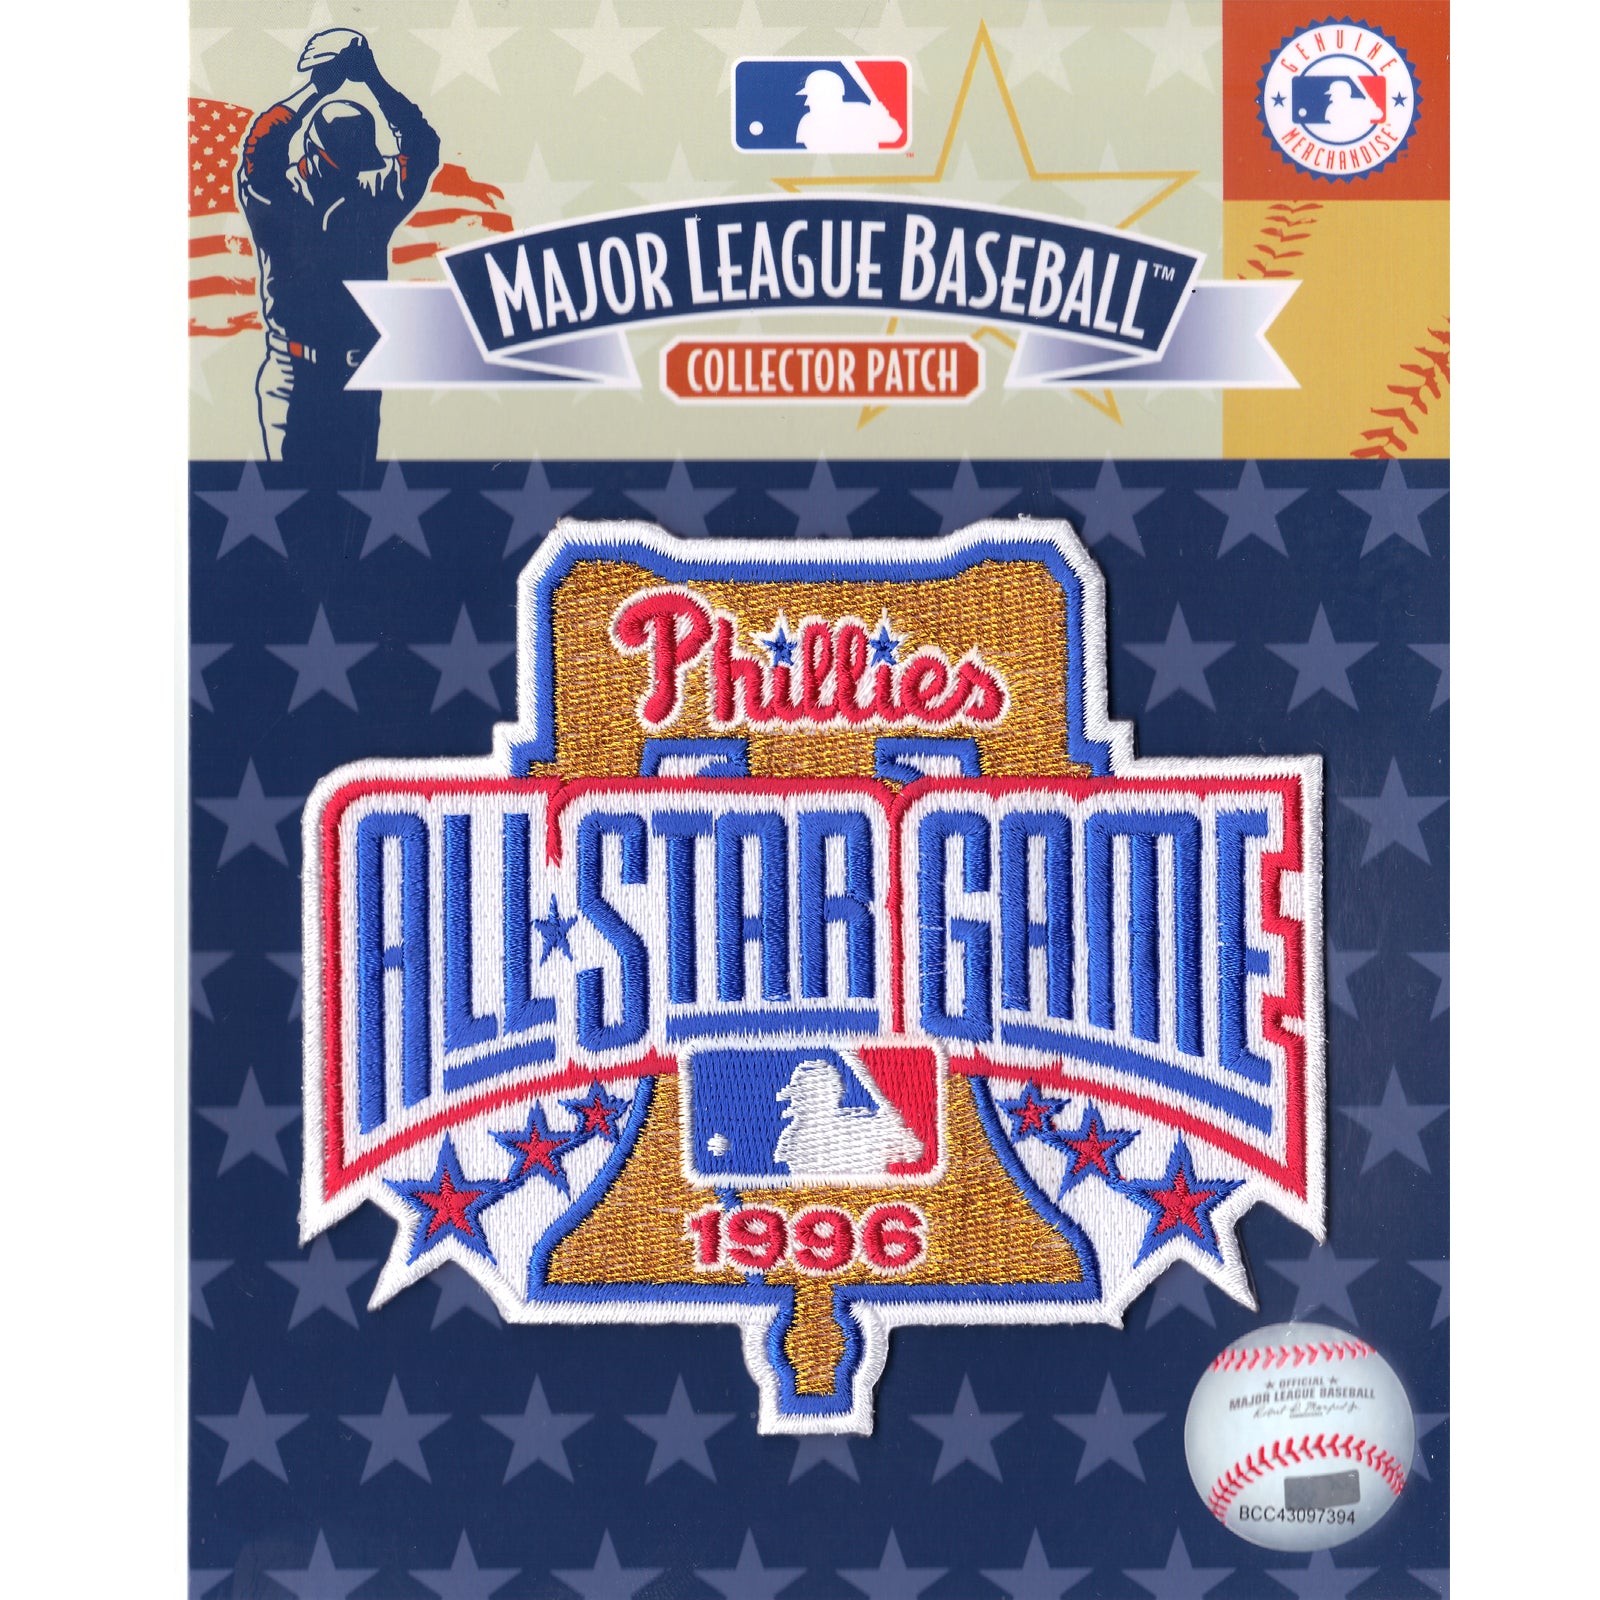 Philadelphia Phillies All-Star Game MLB Jerseys for sale